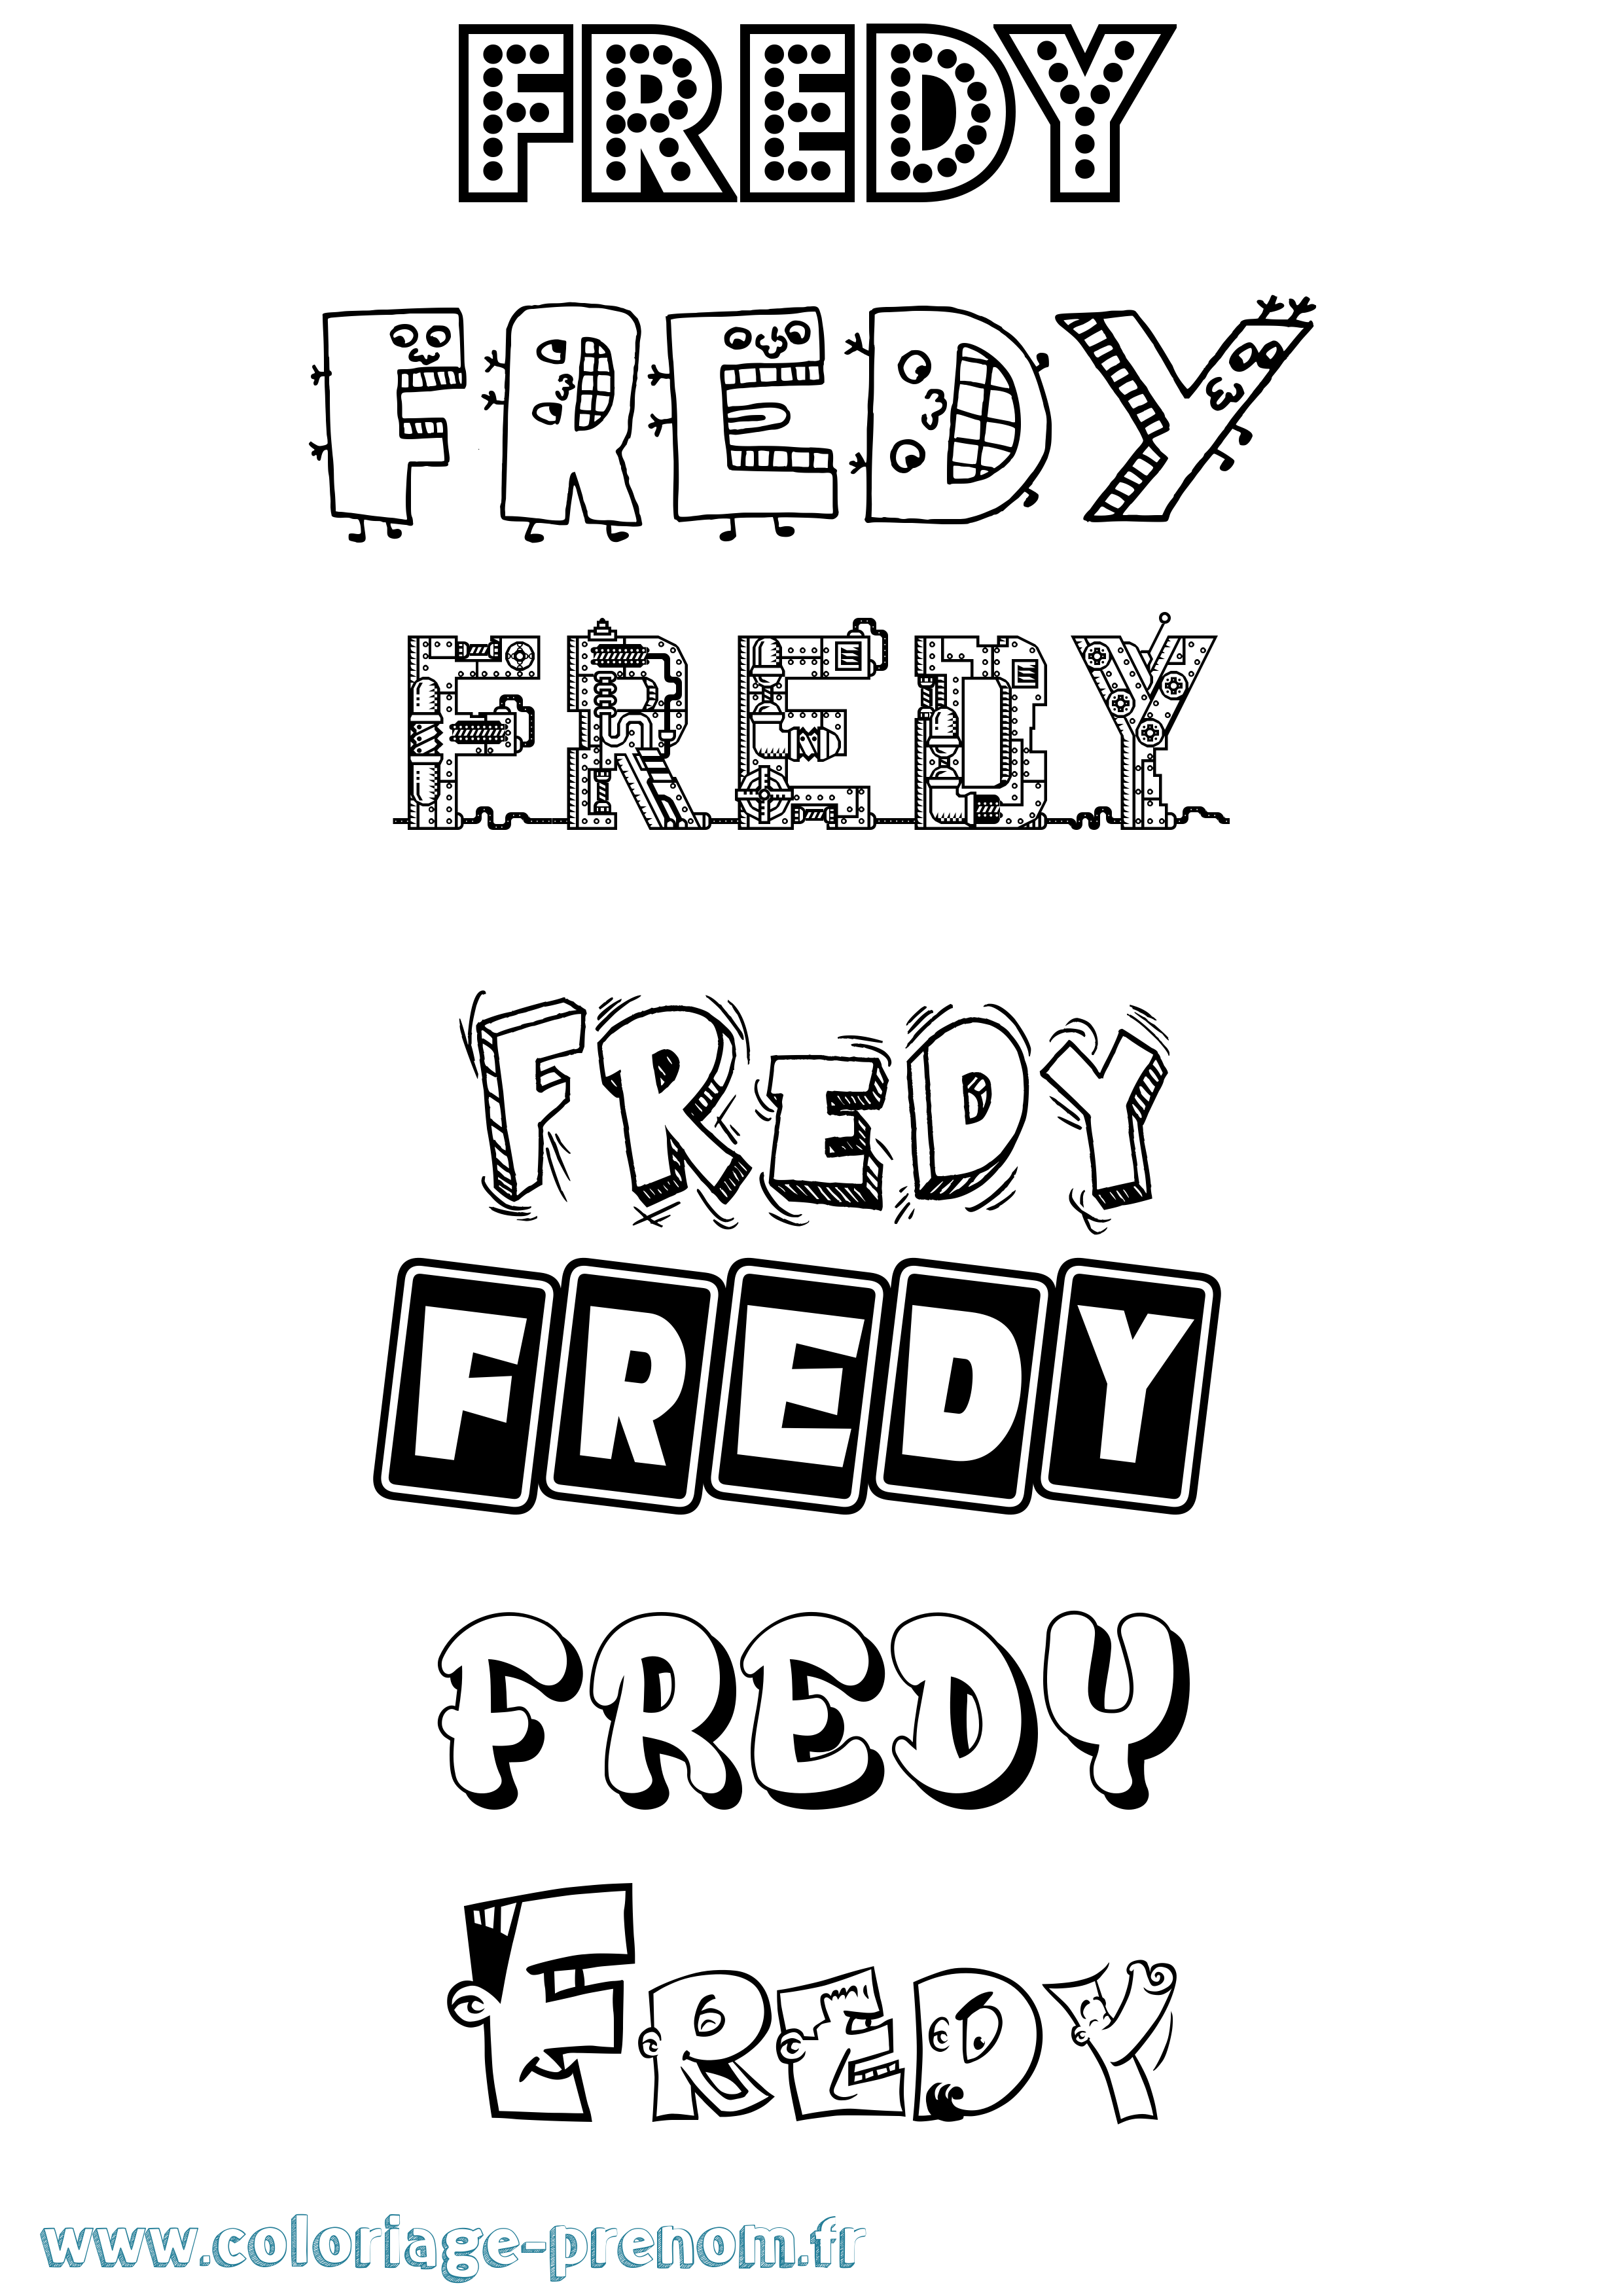 Coloriage prénom Fredy Fun